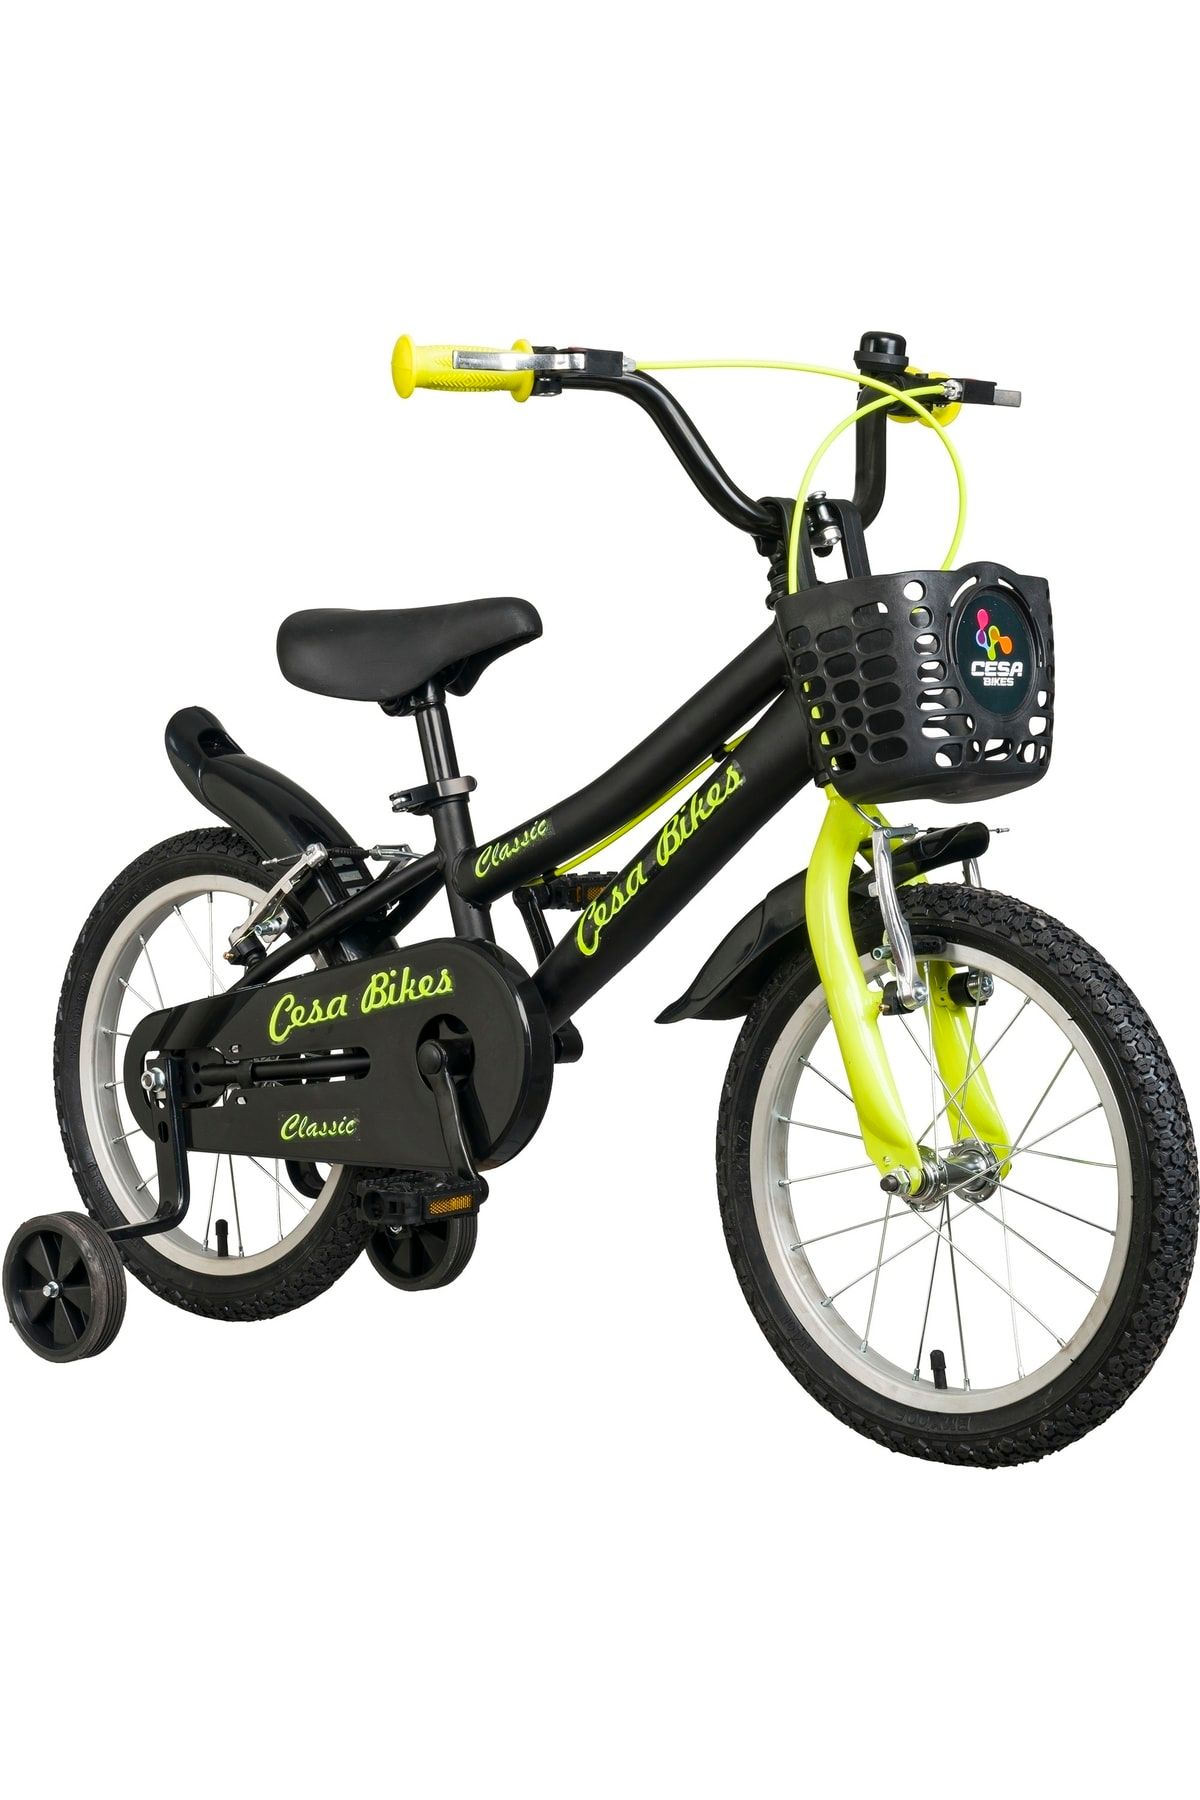 Cesa Bisiklet Cesa Bike Classic Model 16 Jant Bisiklet 4-7 Yaş Çocuk Bisikleti